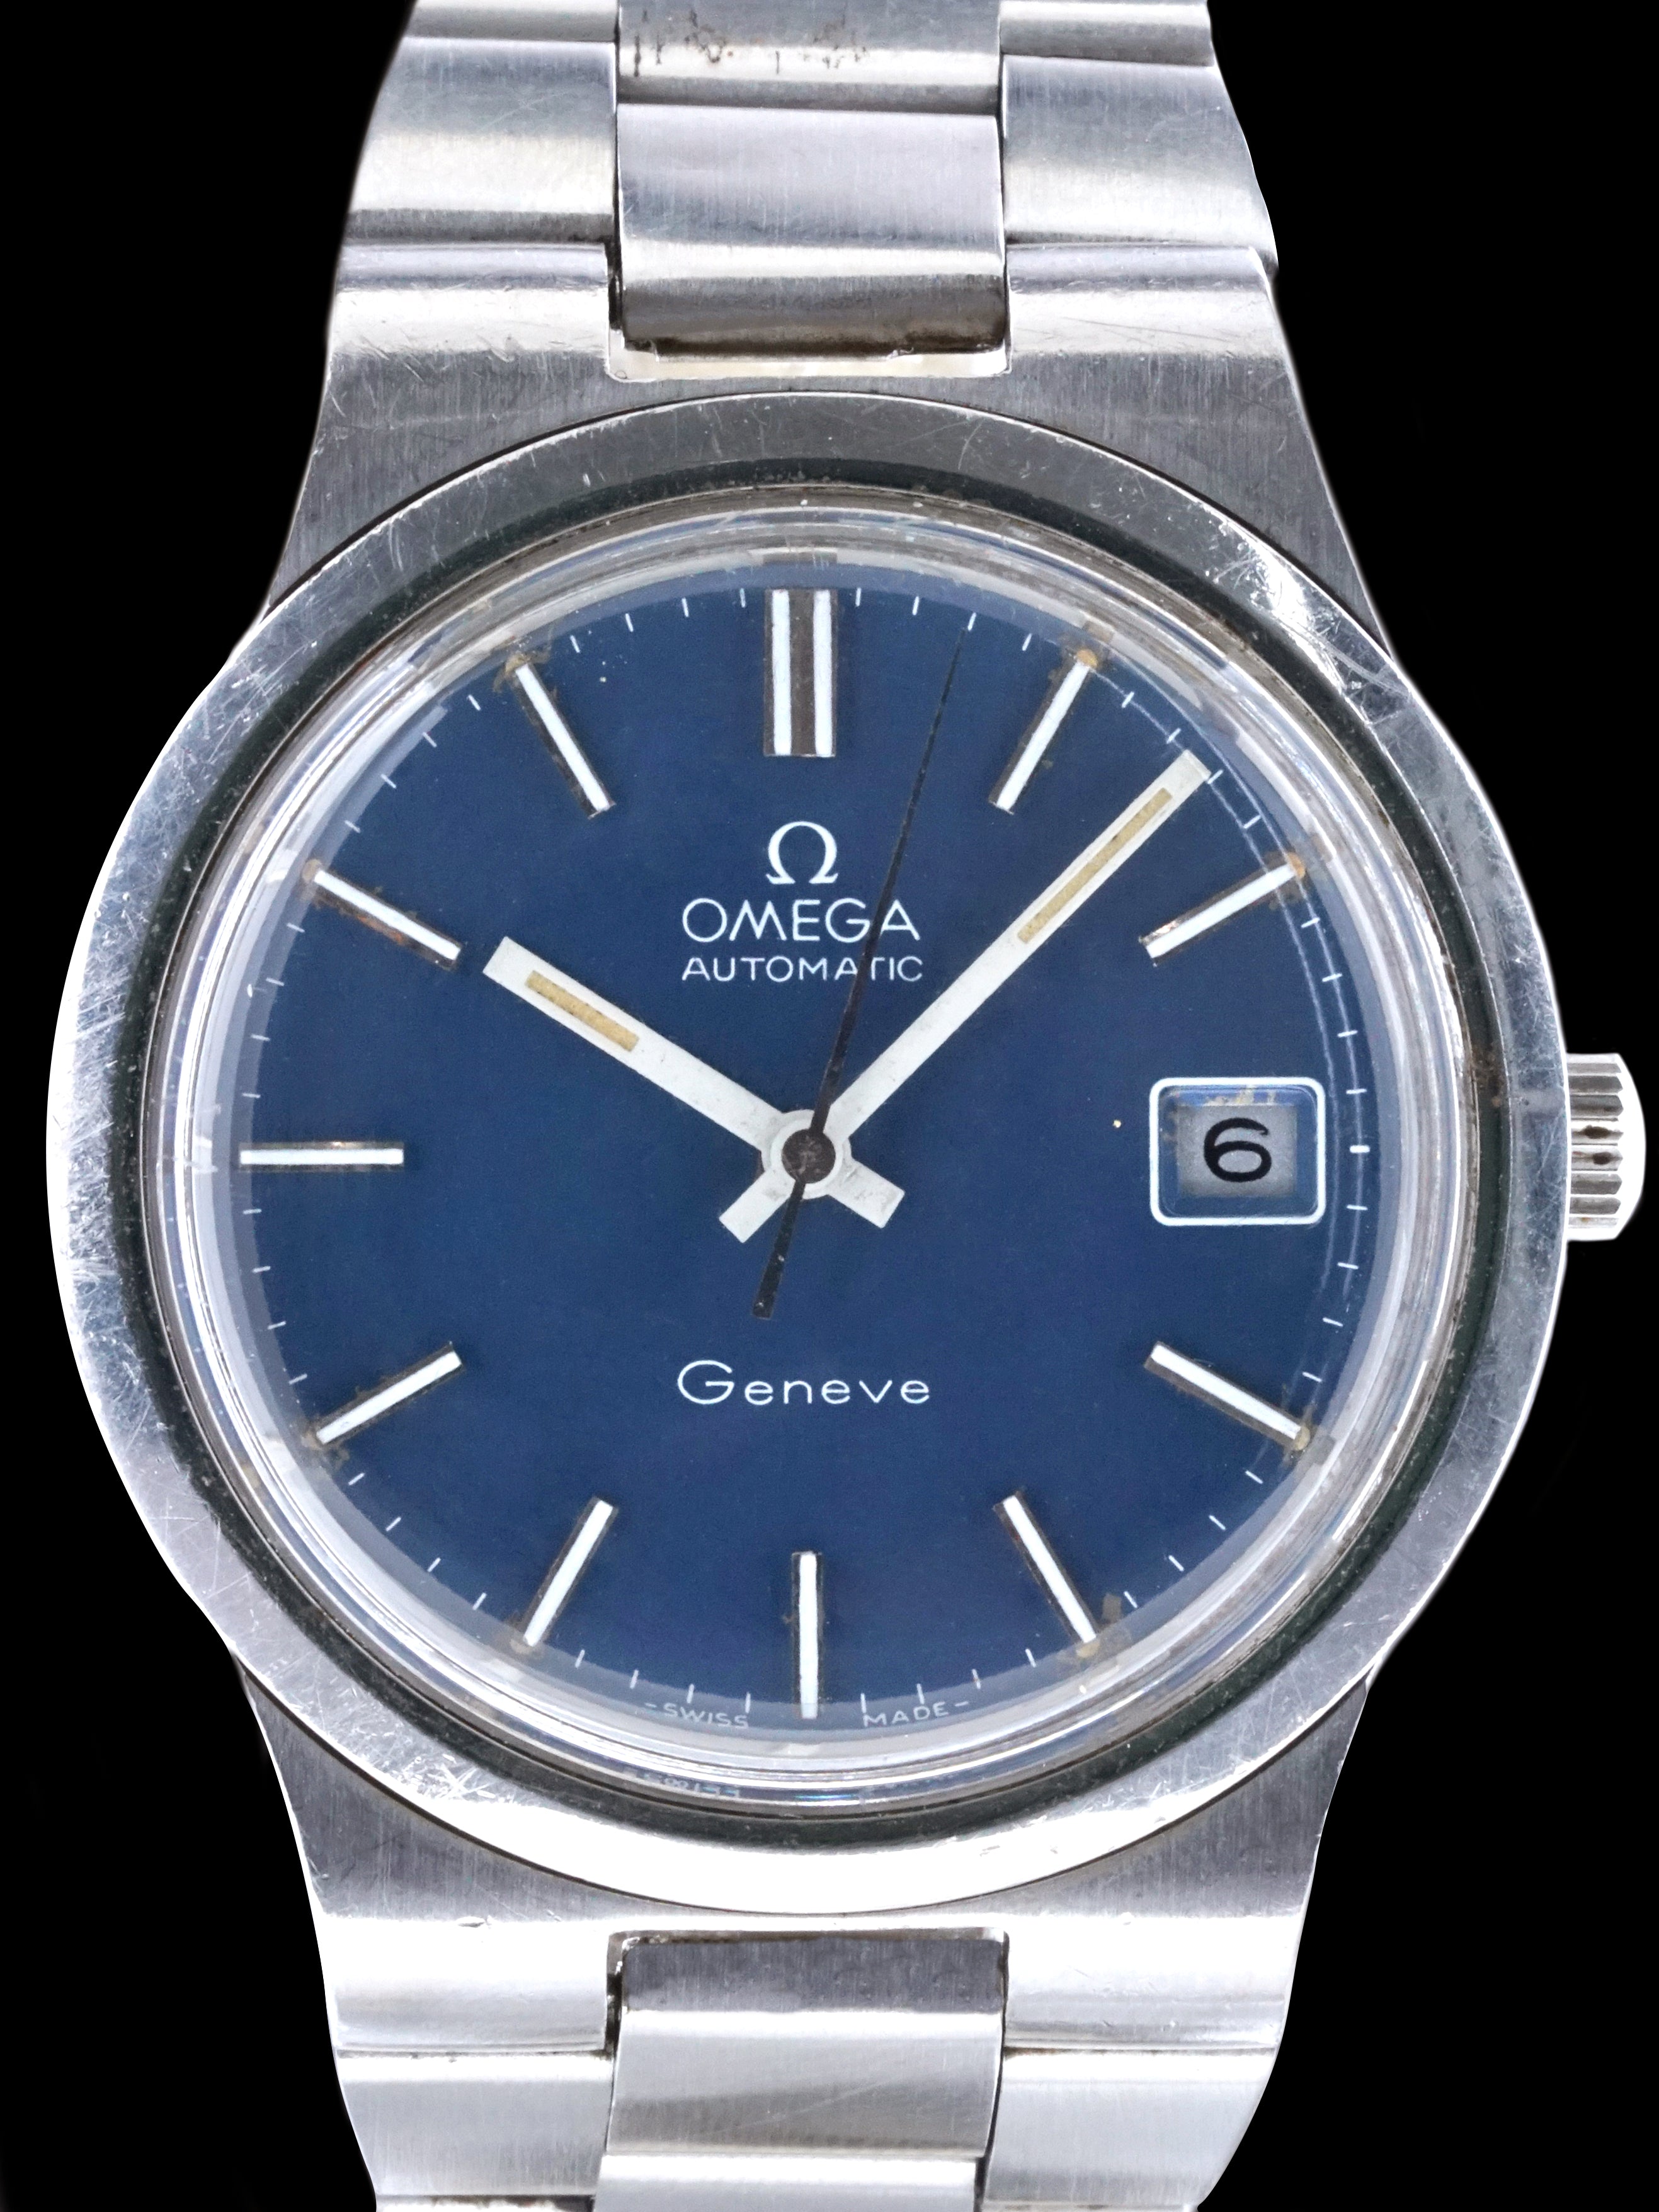 1973 Omega Geneve (Ref. 166.0173) Blue Dial